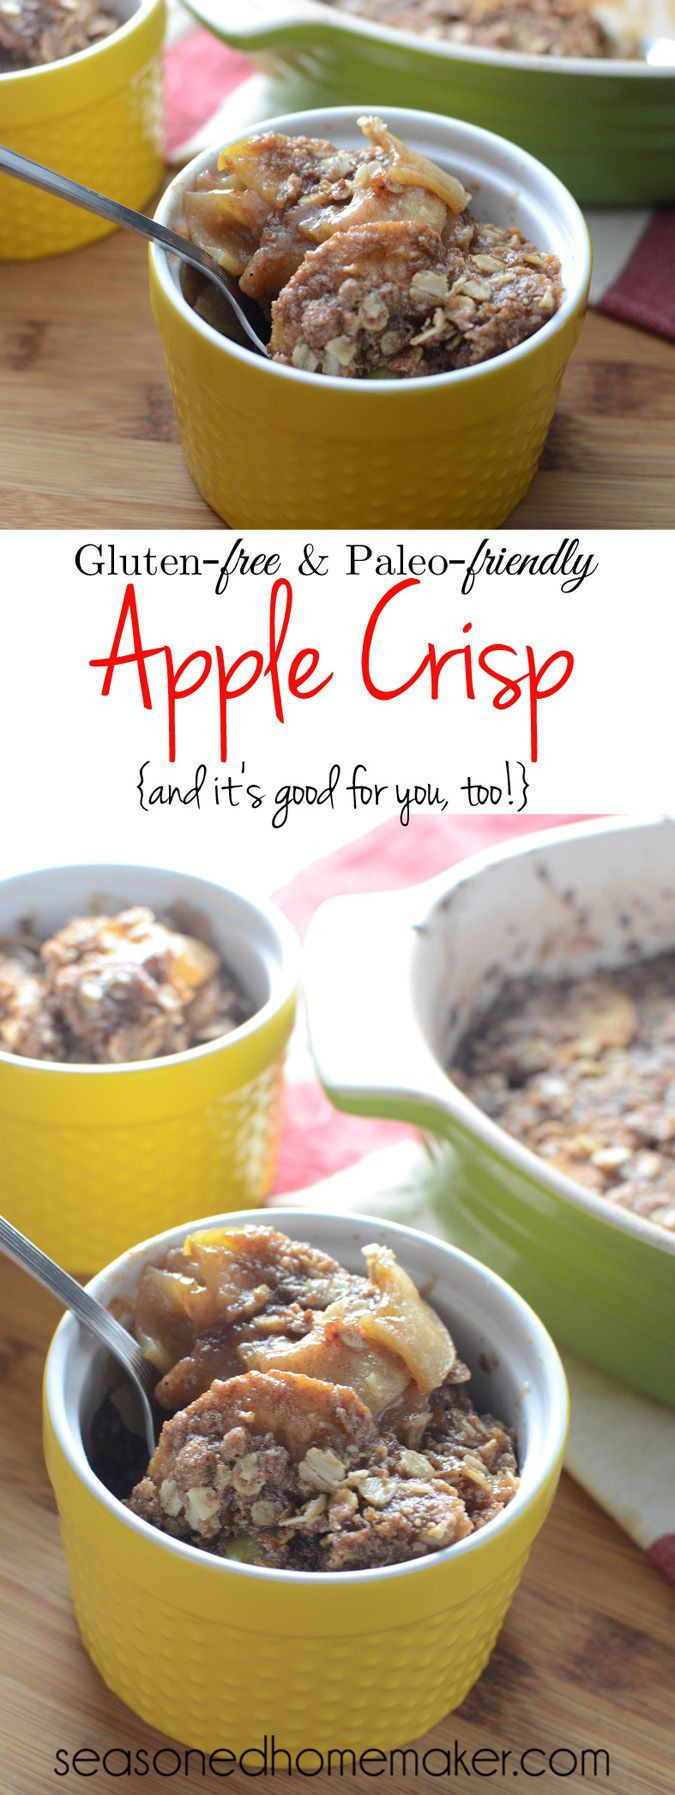 Easy Apple Dessert Recipes With Few Ingredients
 The 25 best Few ingre nt desserts ideas on Pinterest